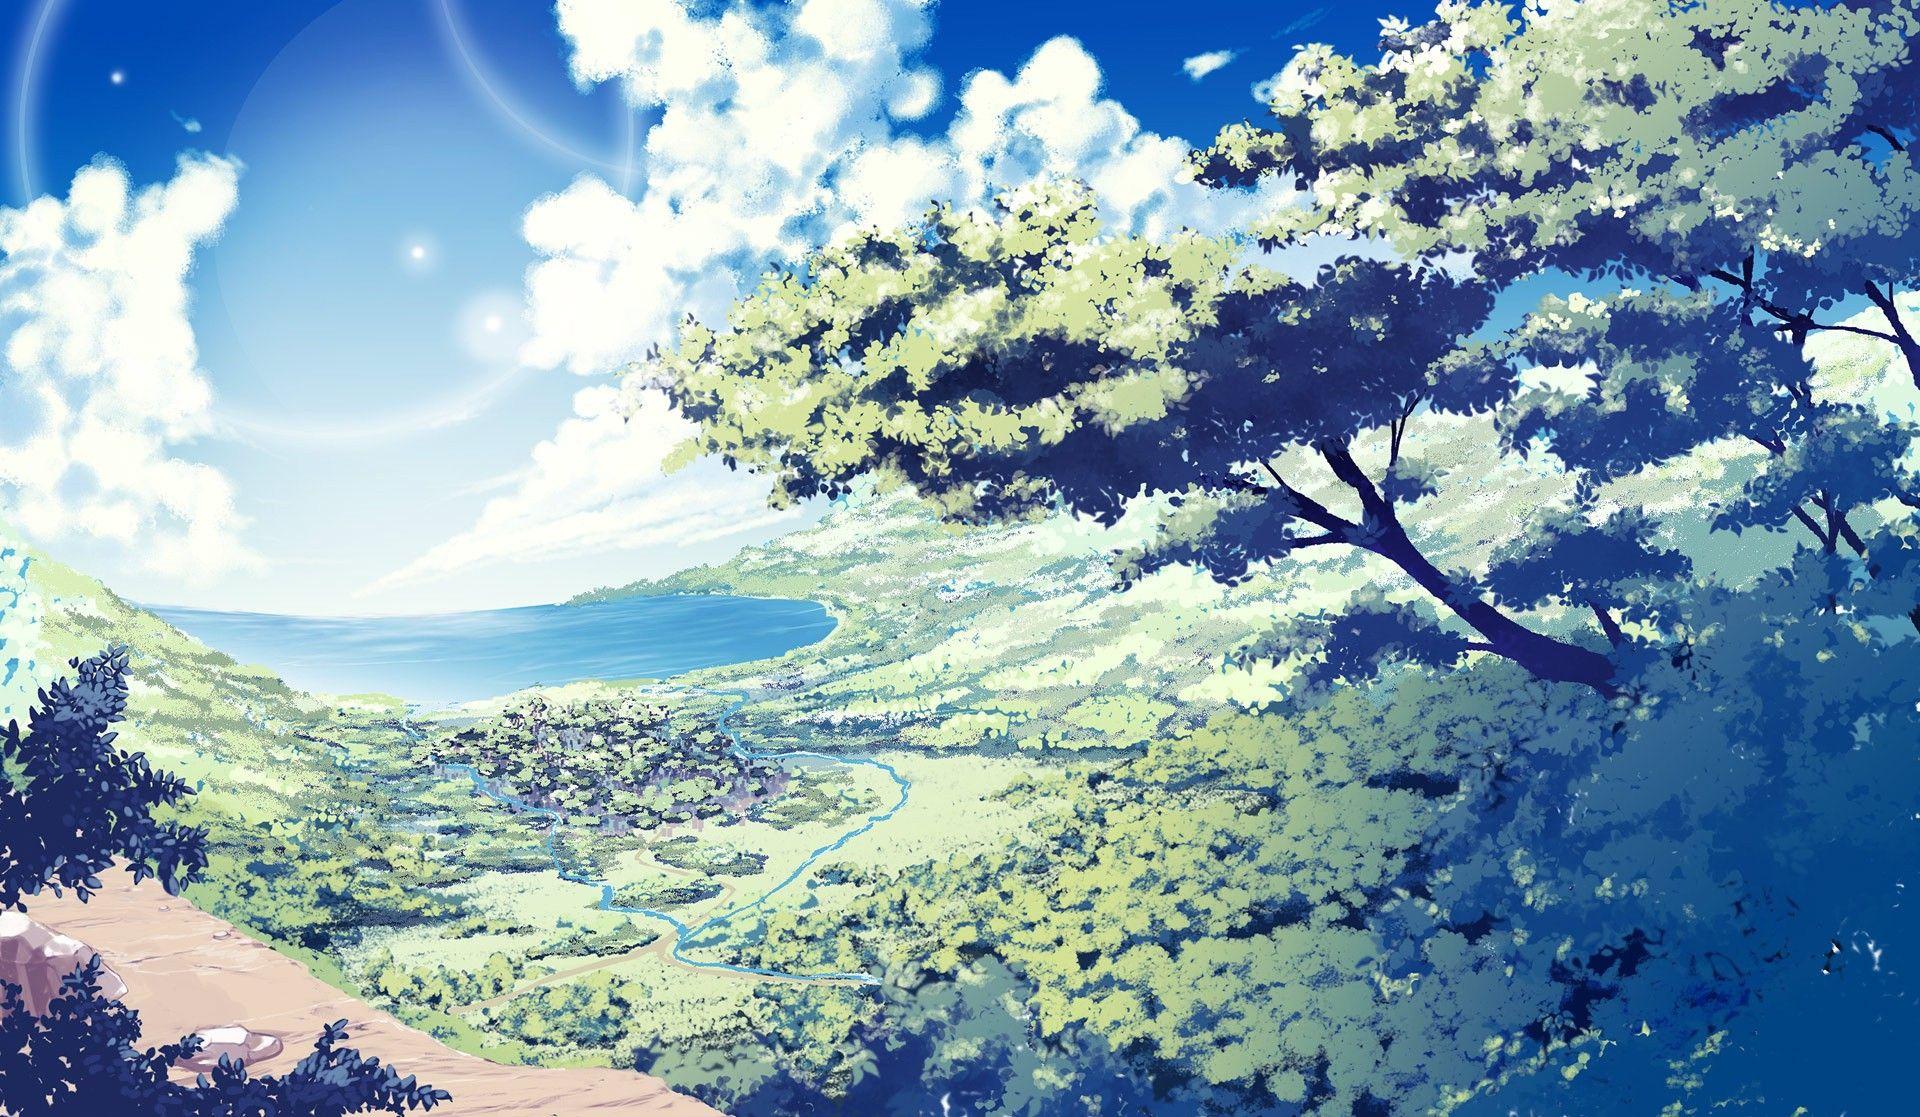 Nature Anime Scenery Background Wallpaper. Anime scenery wallpaper, Anime background wallpaper, Scenery wallpaper